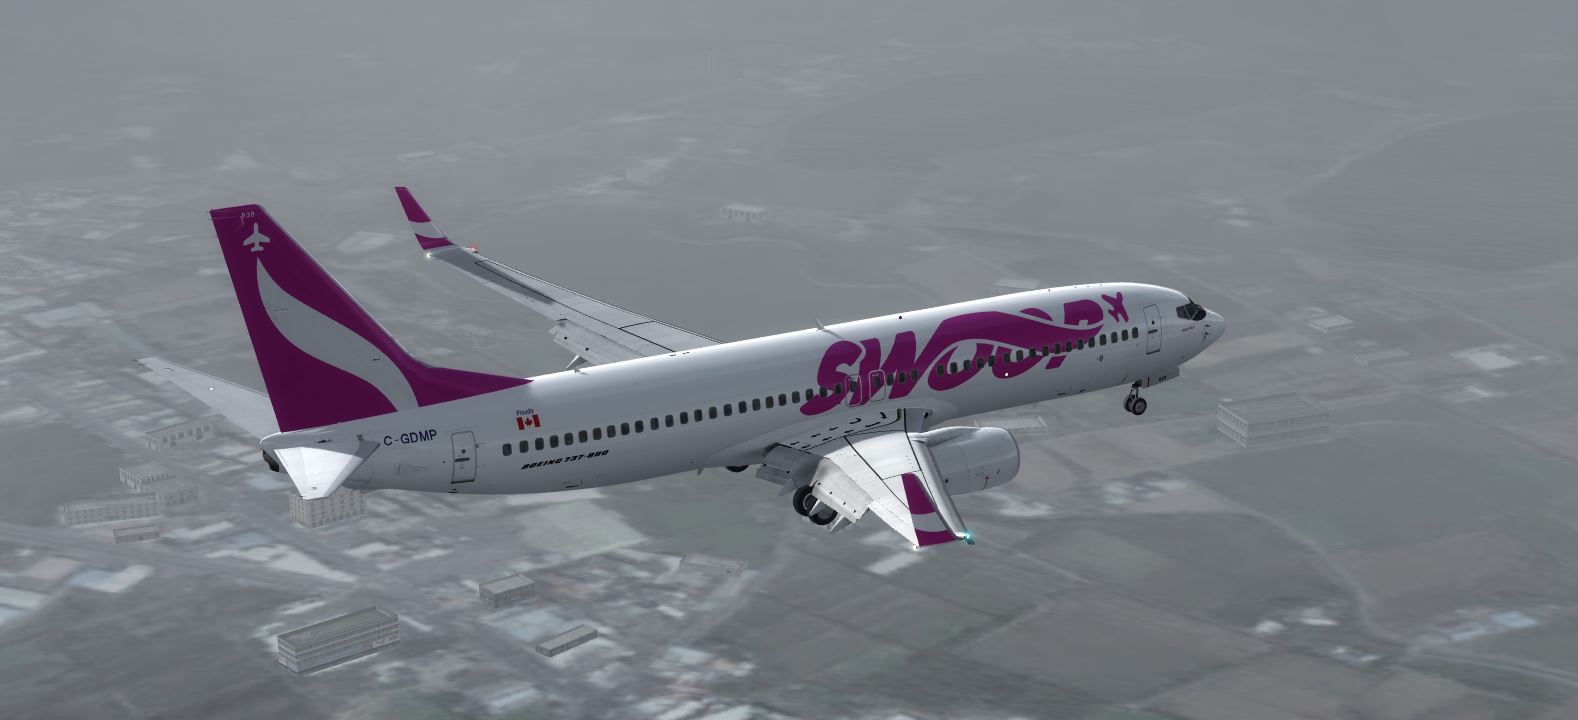 B737-800 Swoop Airlines-1570 